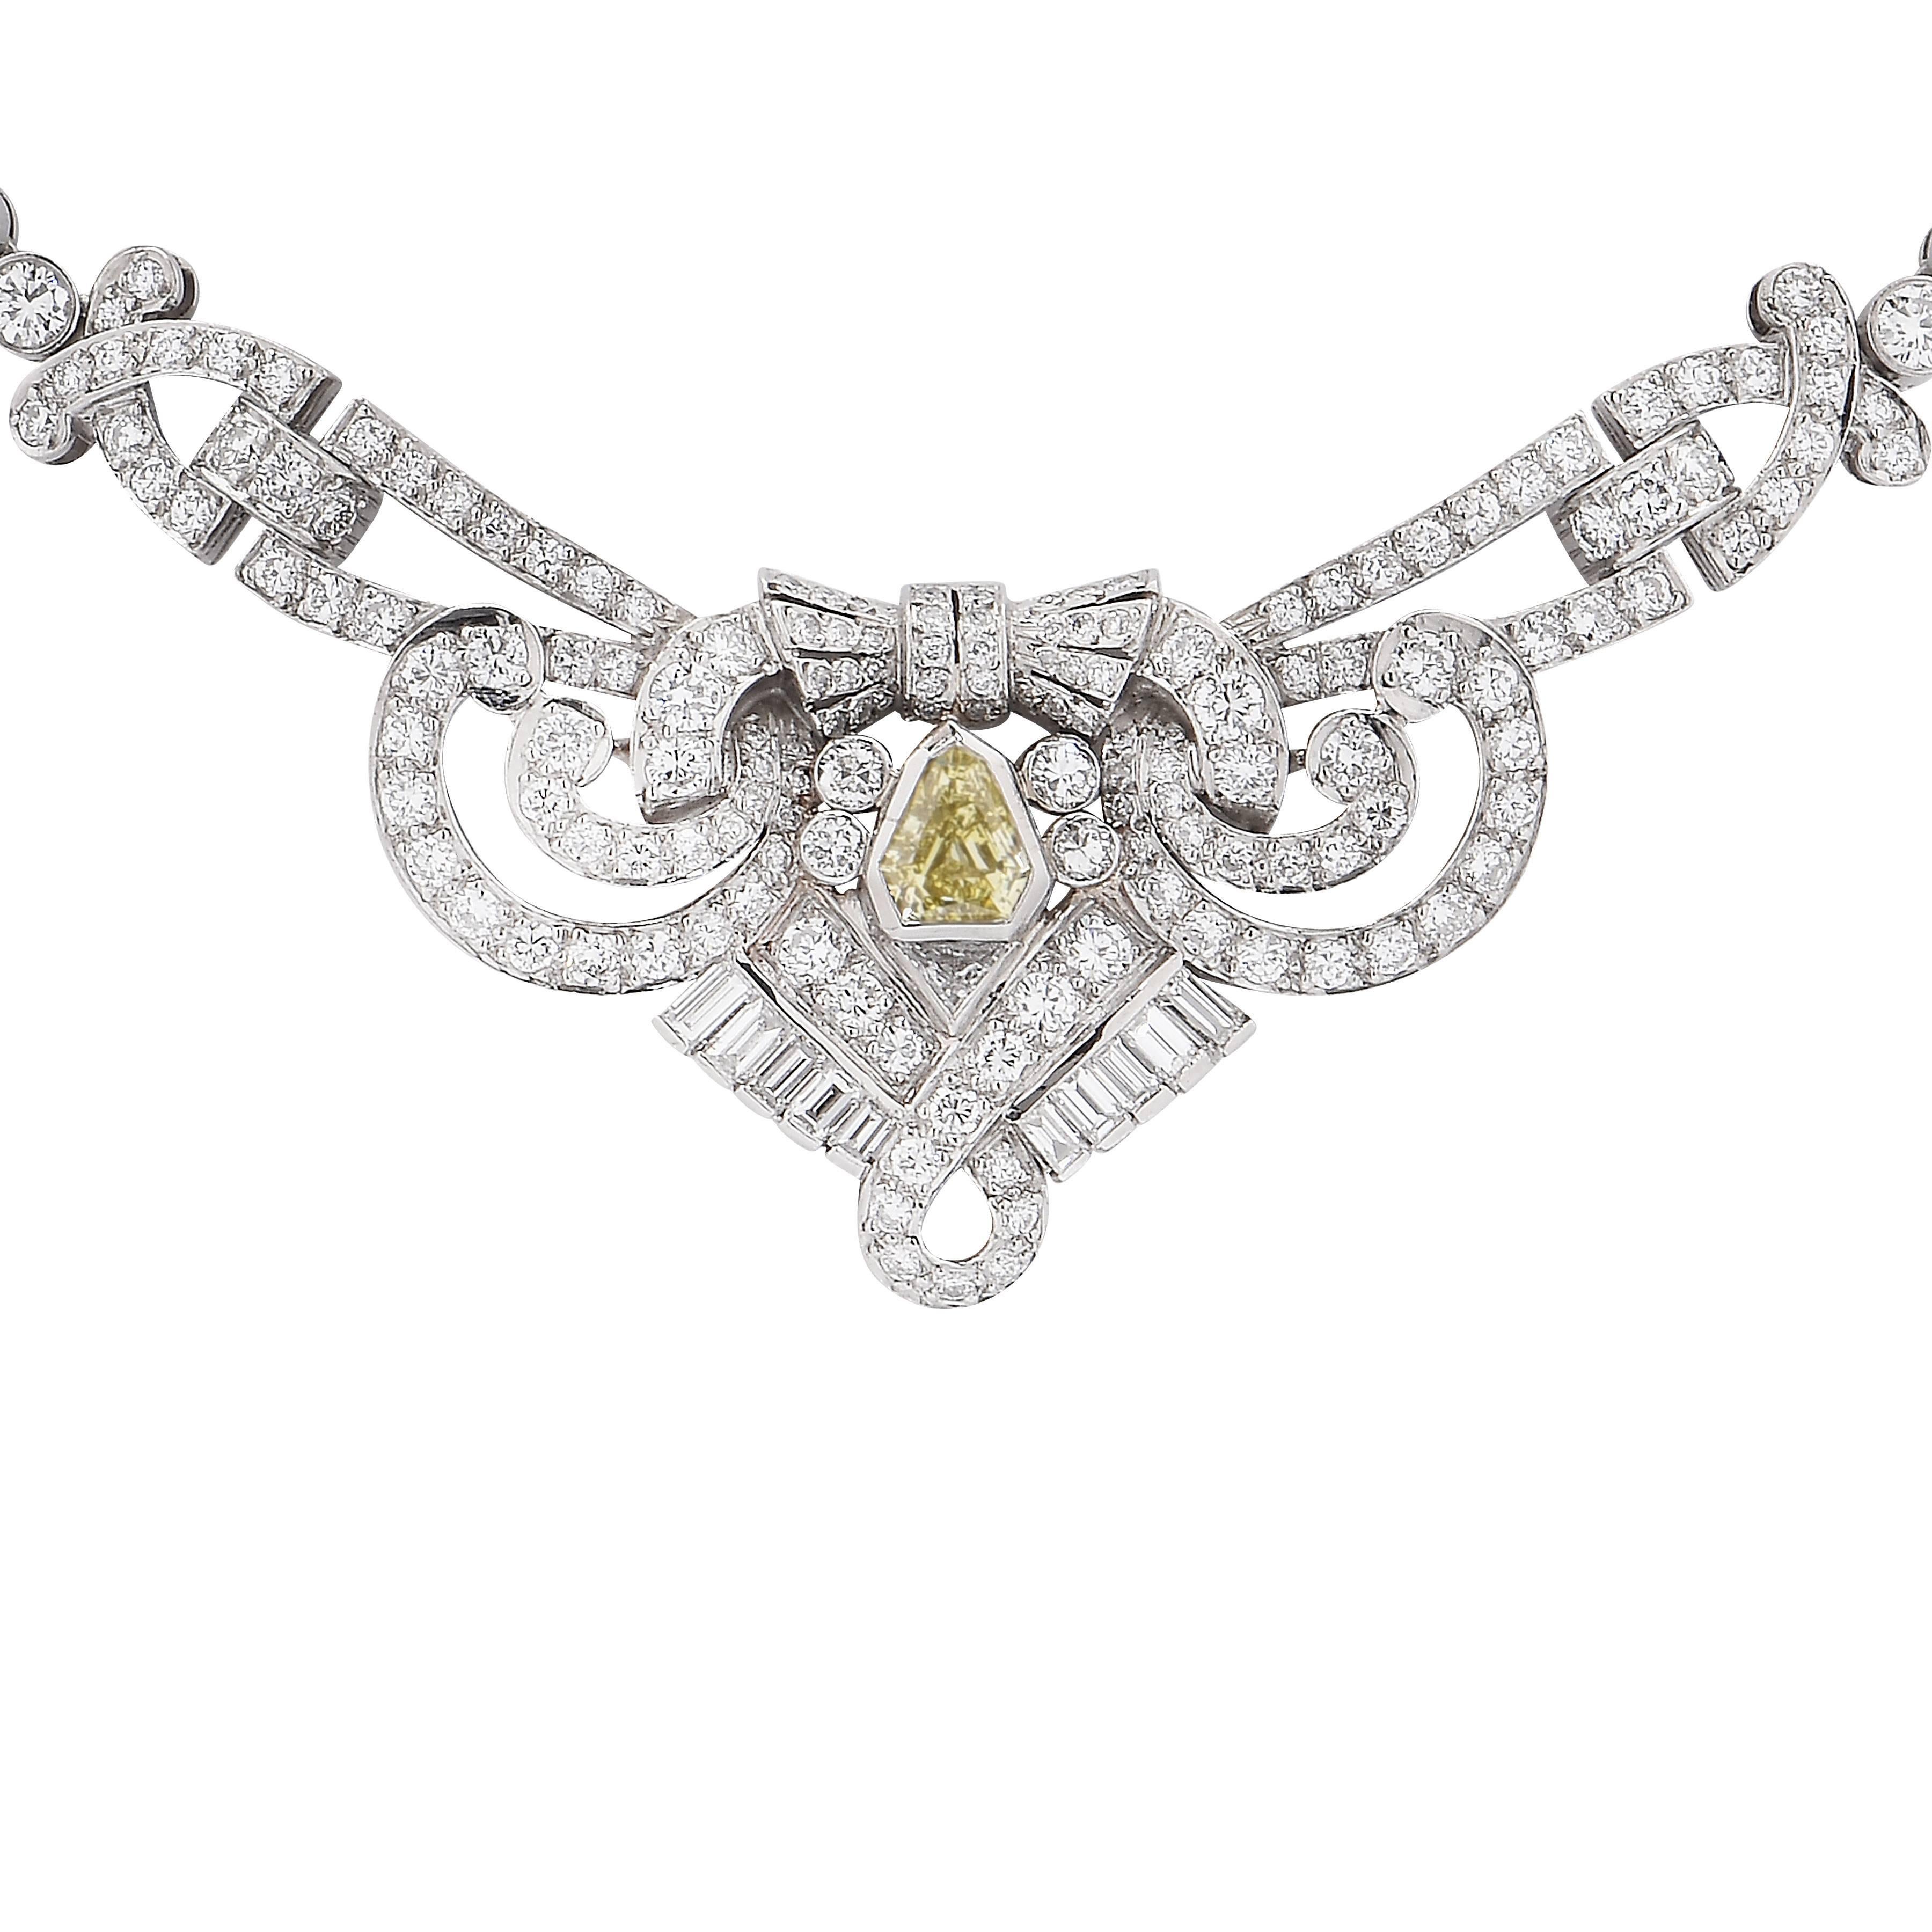 Tahitian diamond necklace GG 585/000 with one gray Tahit… | Drouot.com